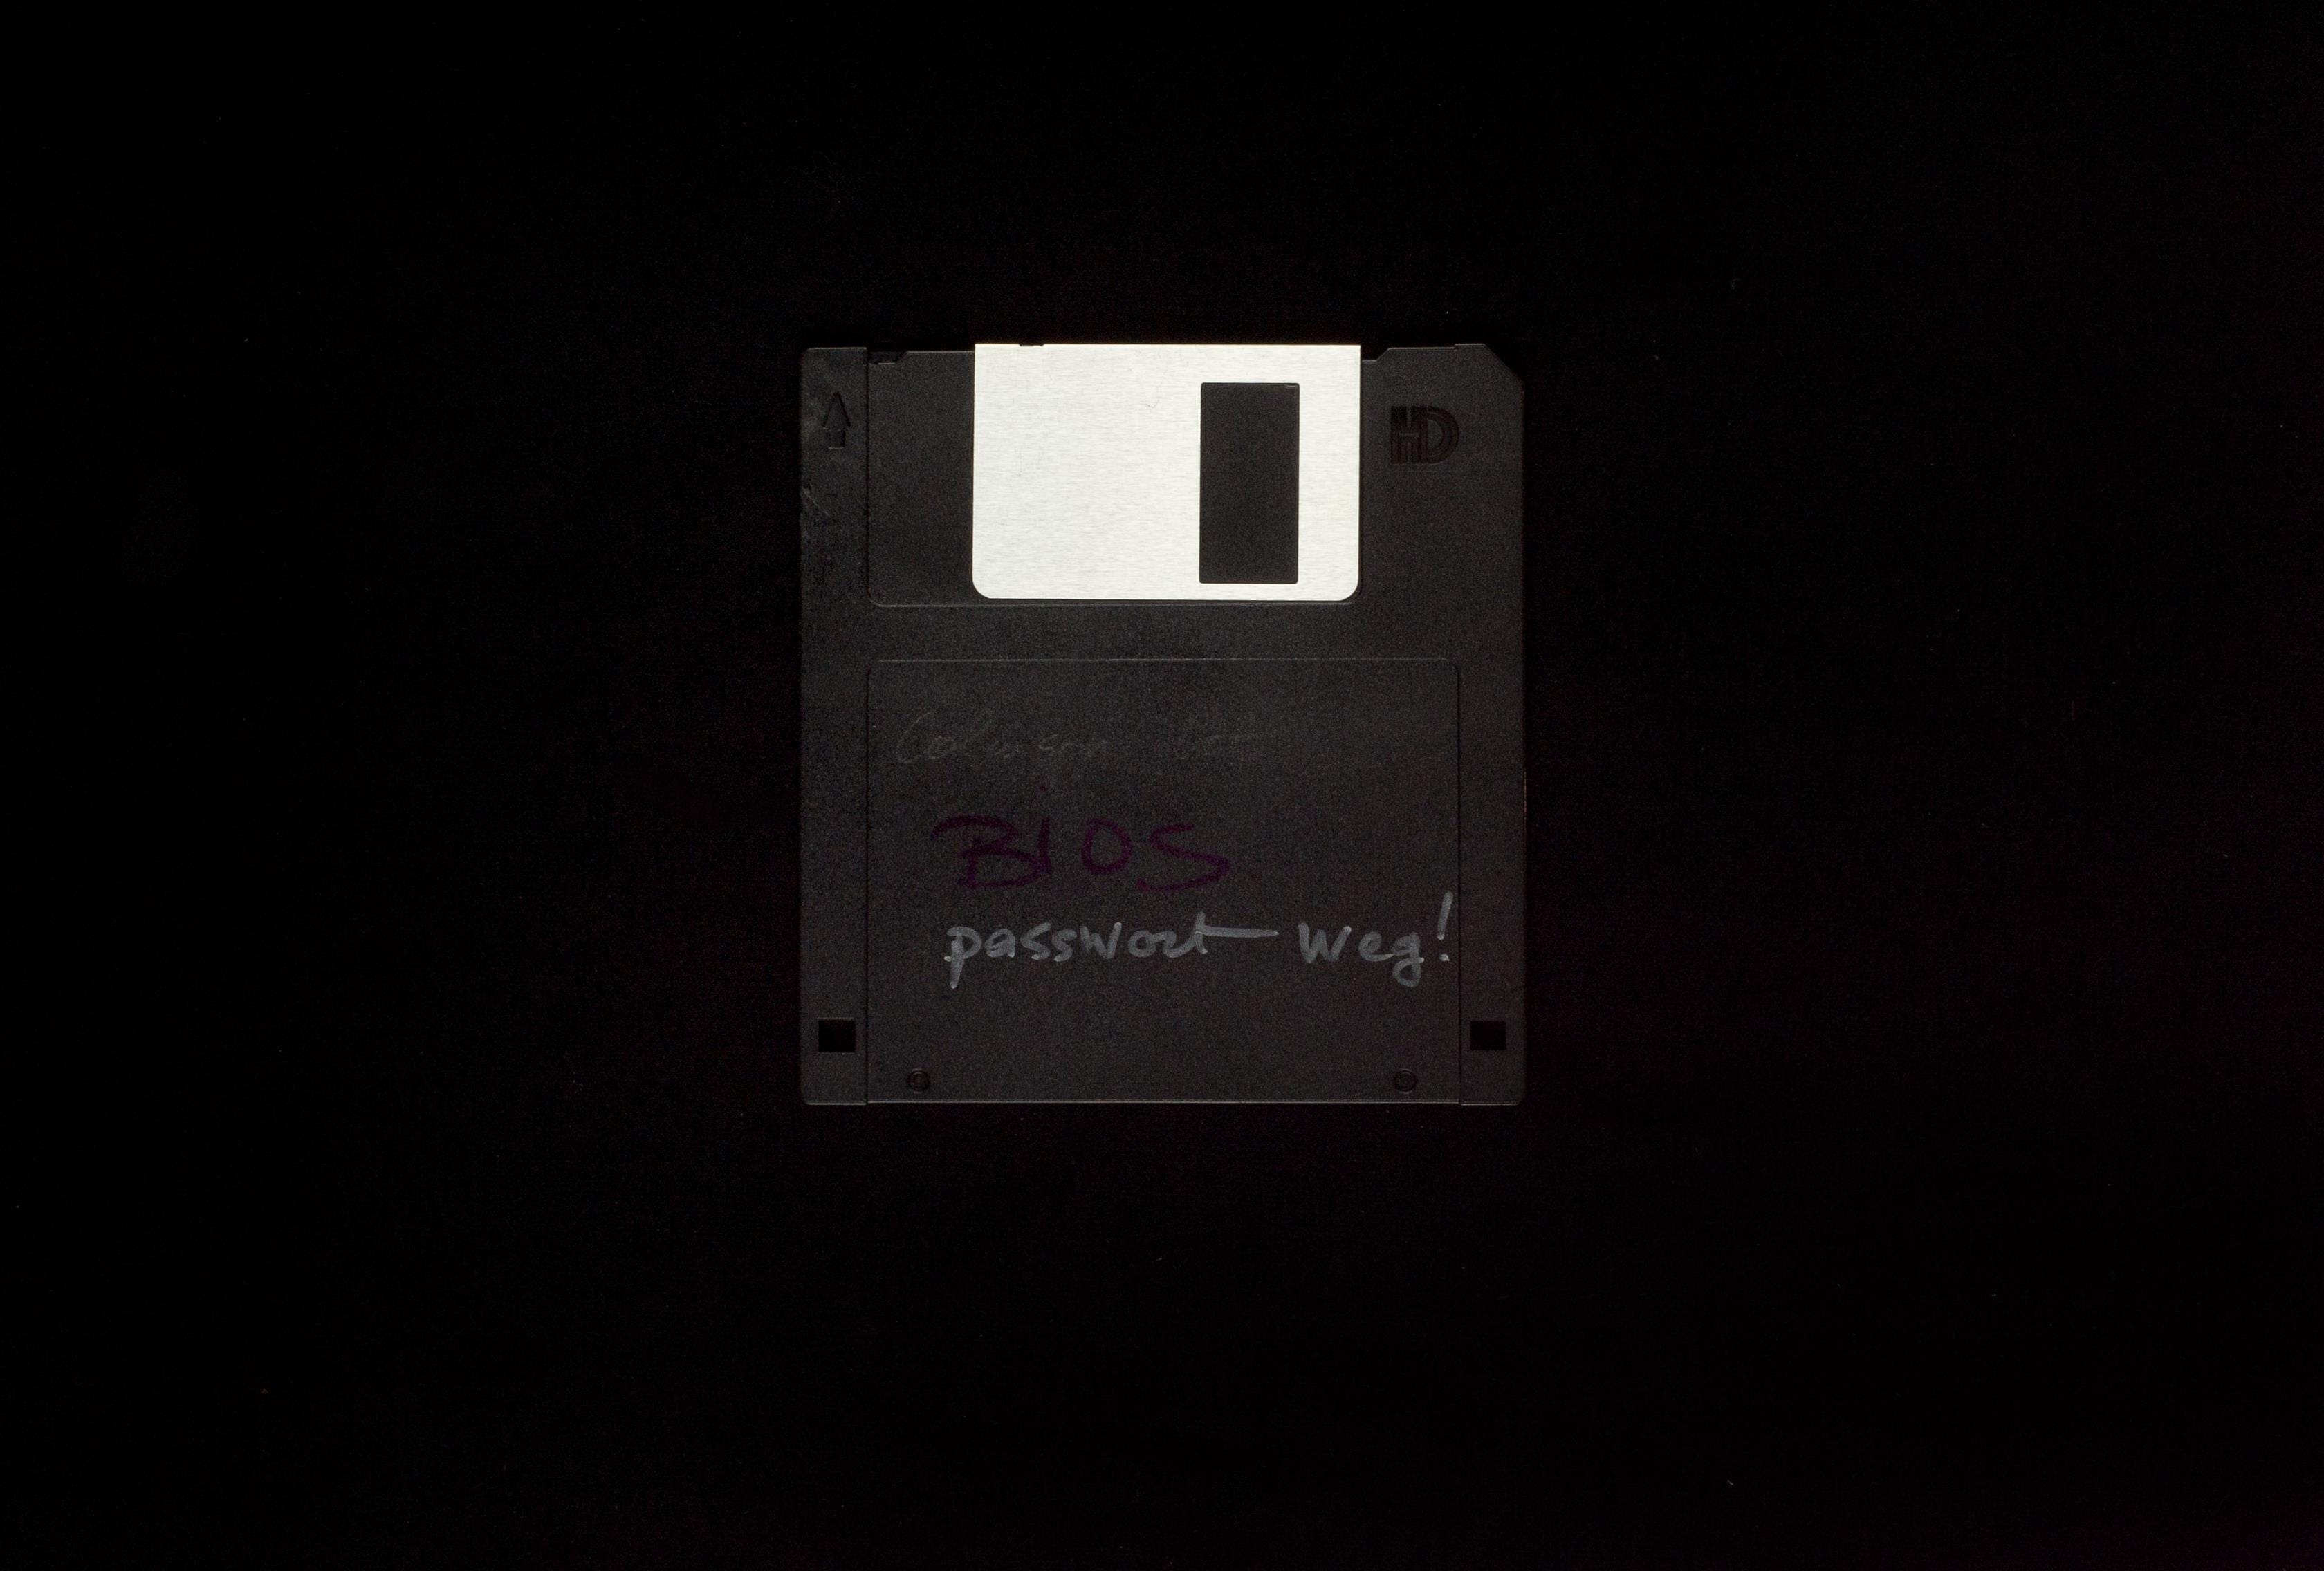 2-5 BIOS – Passwort weg (unbekannt)